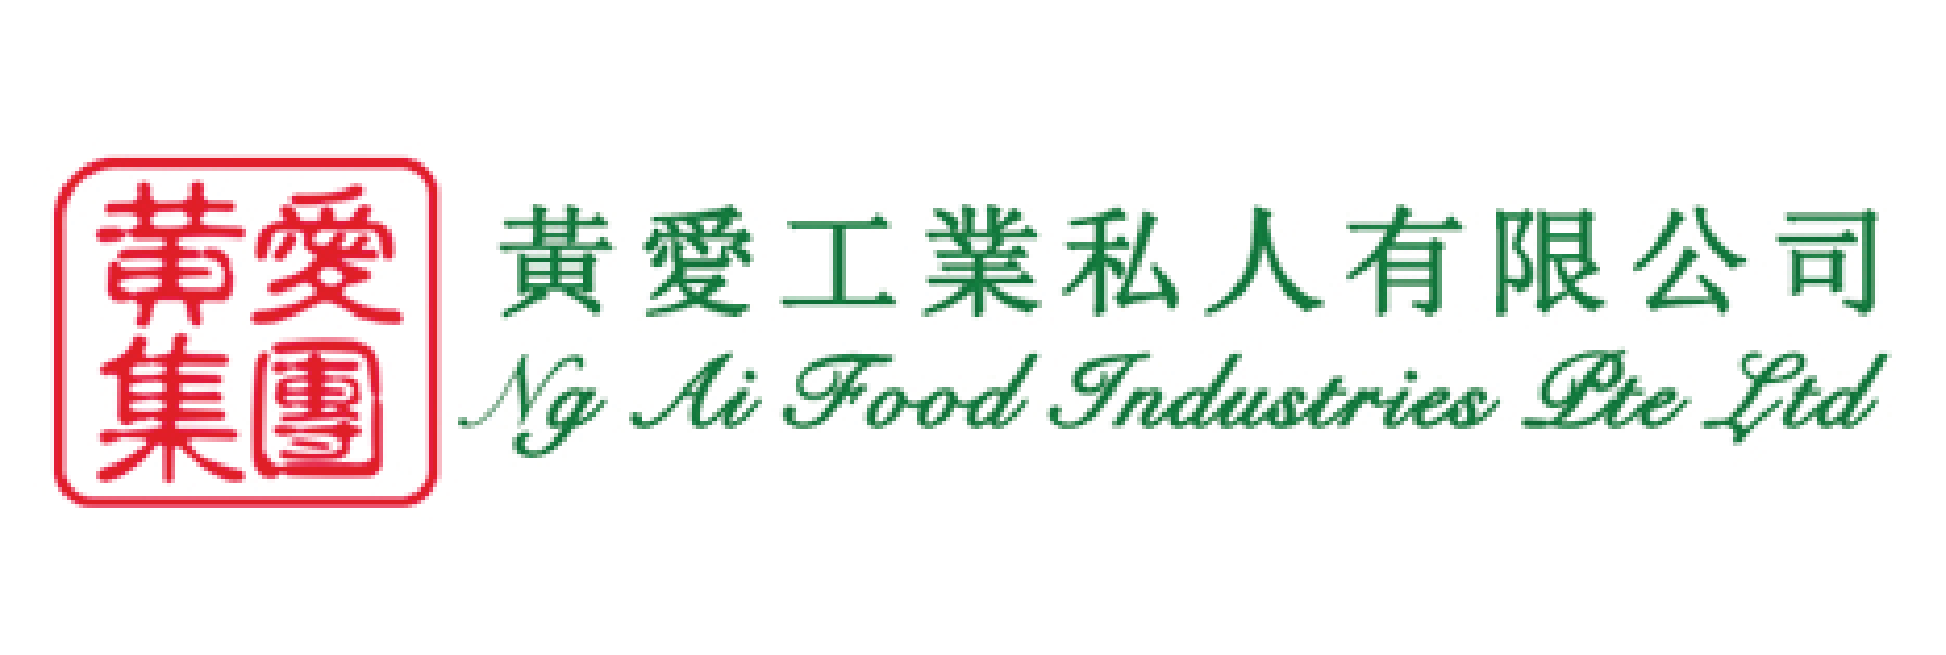 Ng Ai Food Industries Pte Ltd Logo